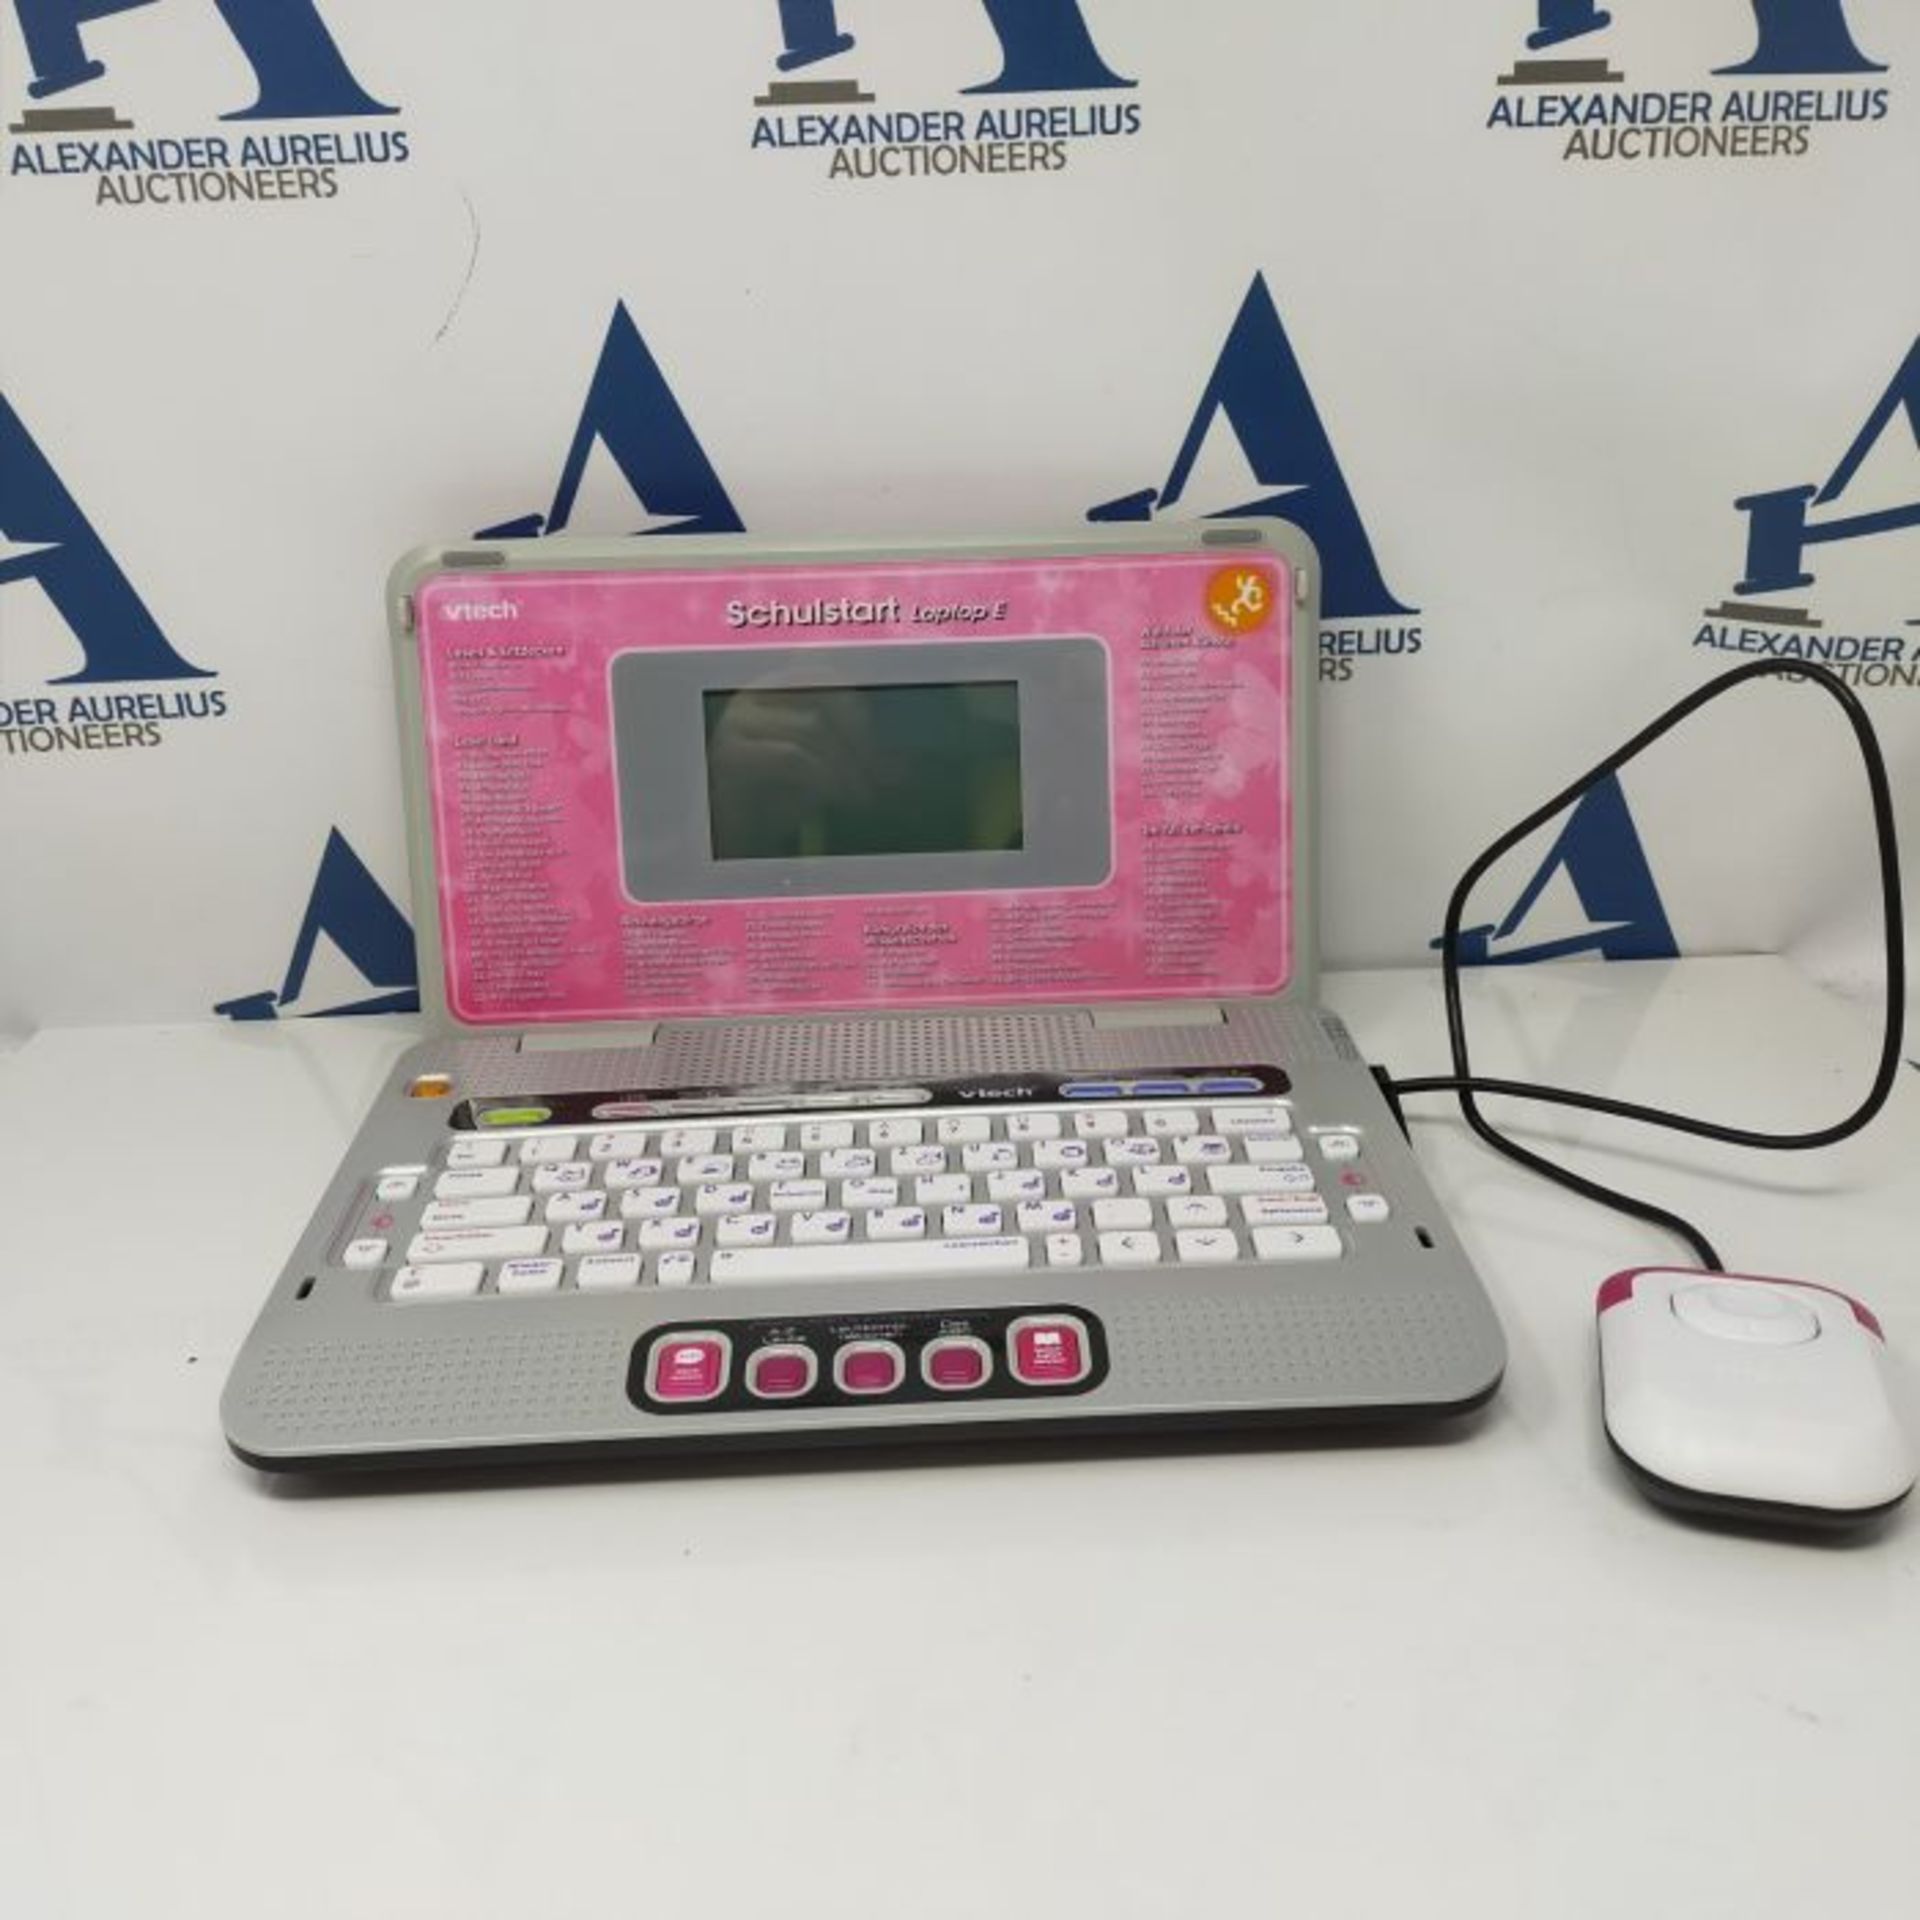 VTech 80-109794 - Schulstart Laptop E pink - Image 2 of 2